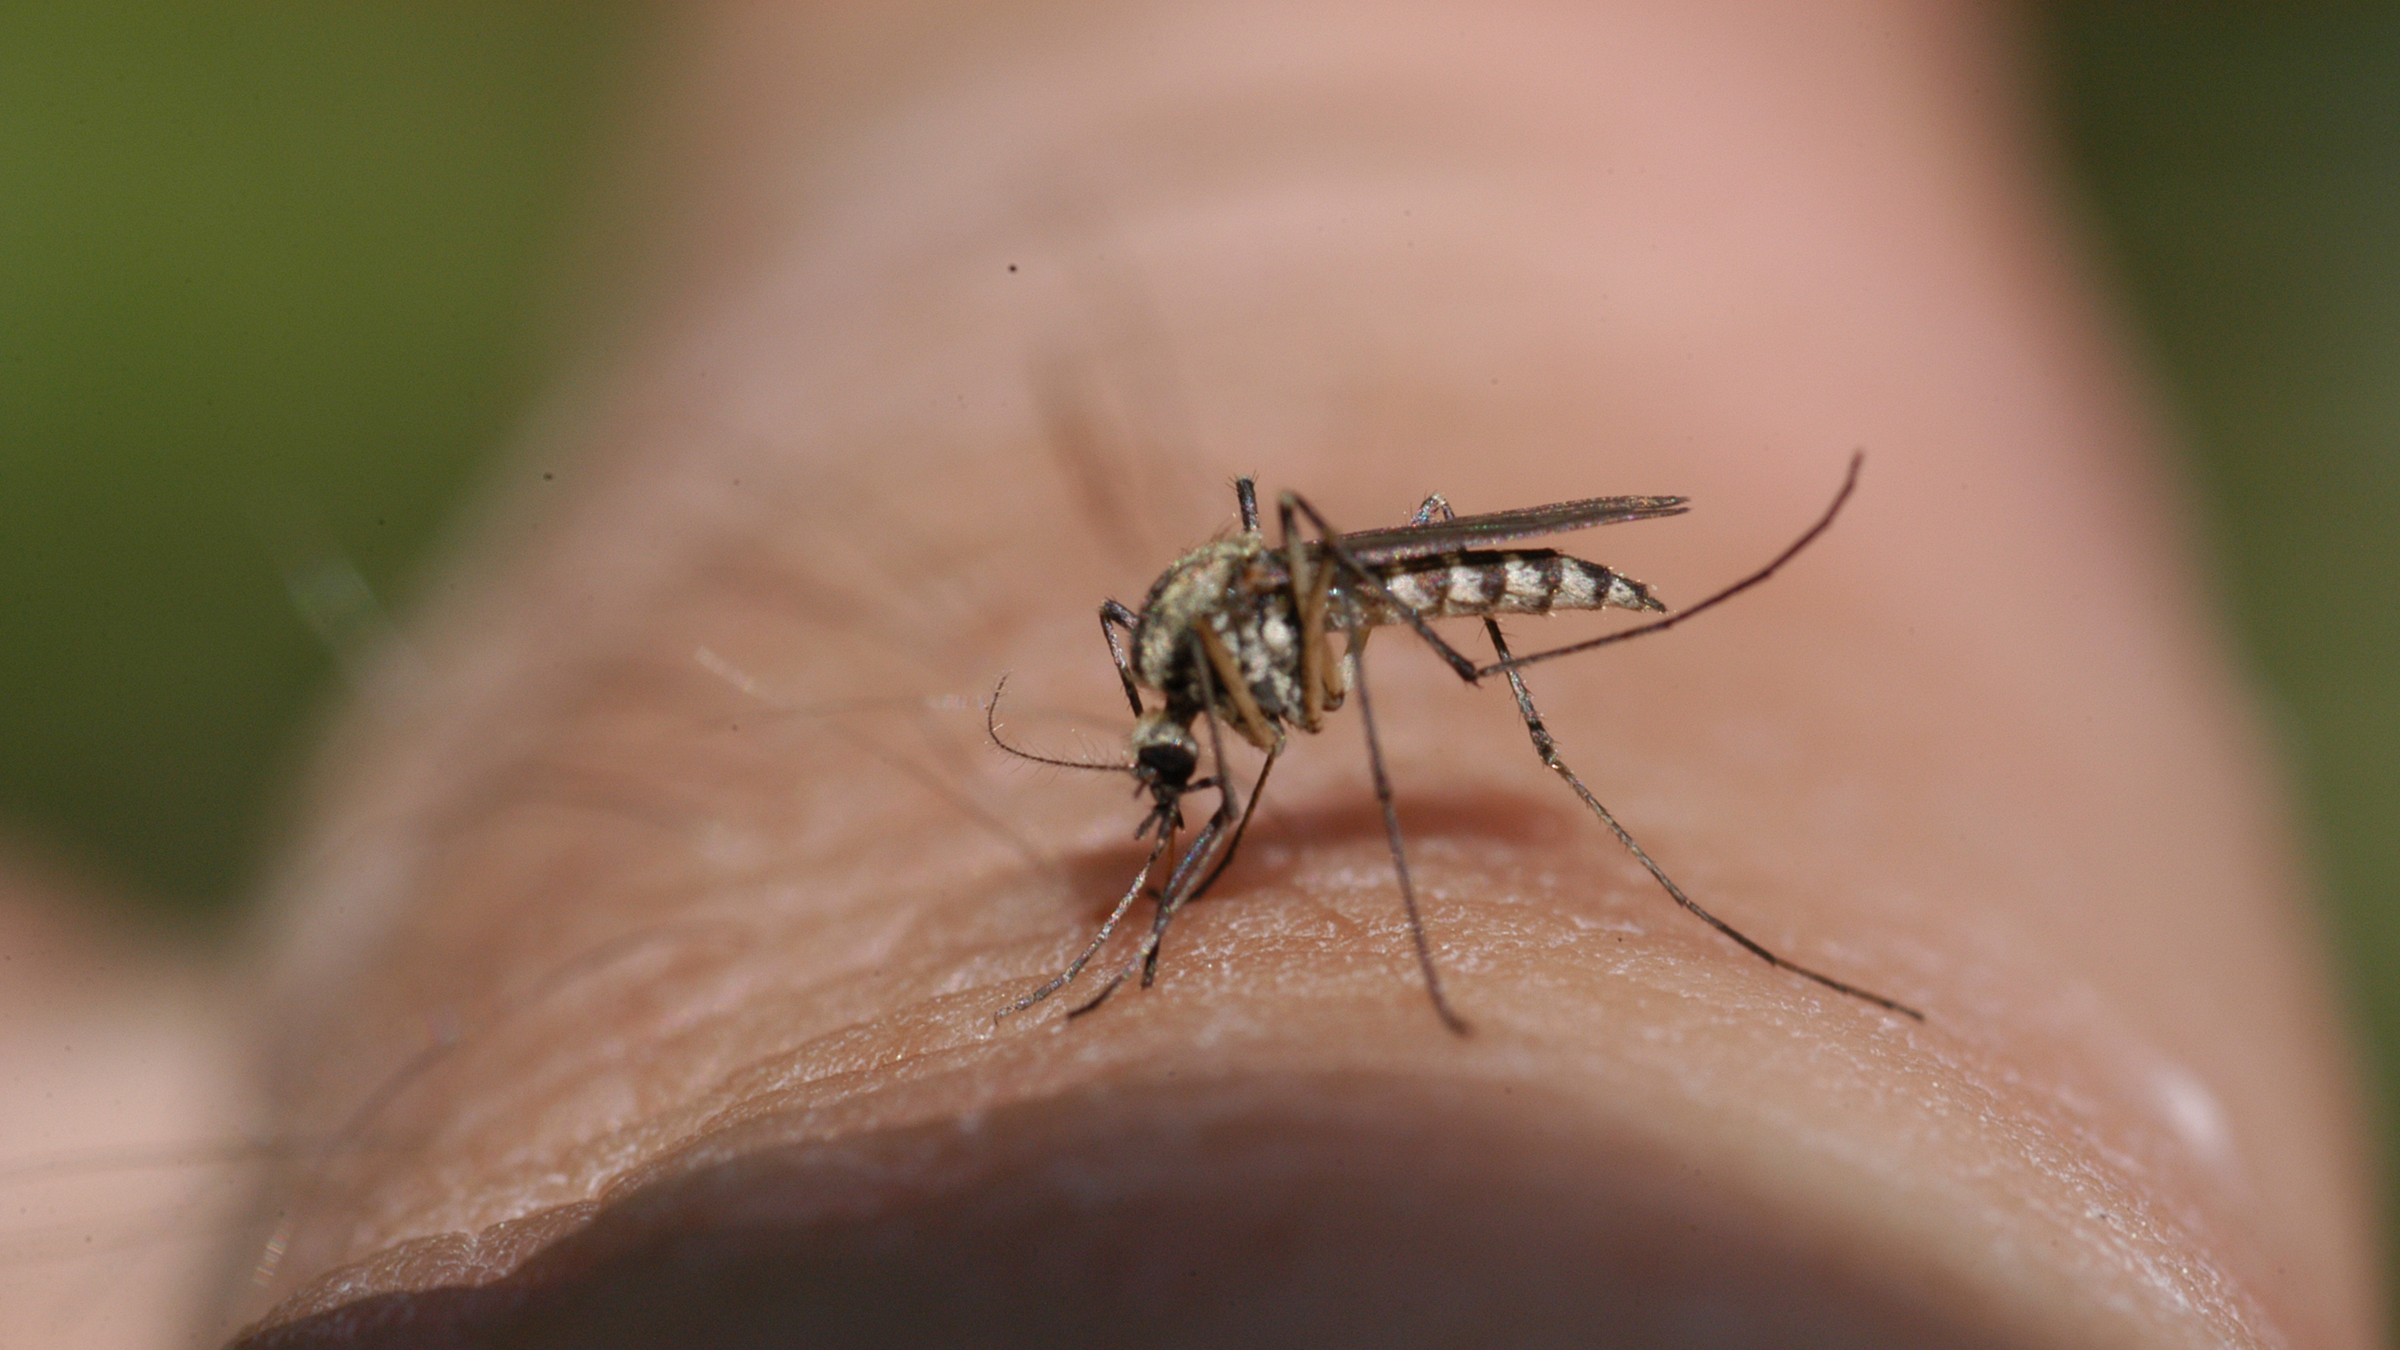 Mosquito-borne virus death reported in Kalamazoo